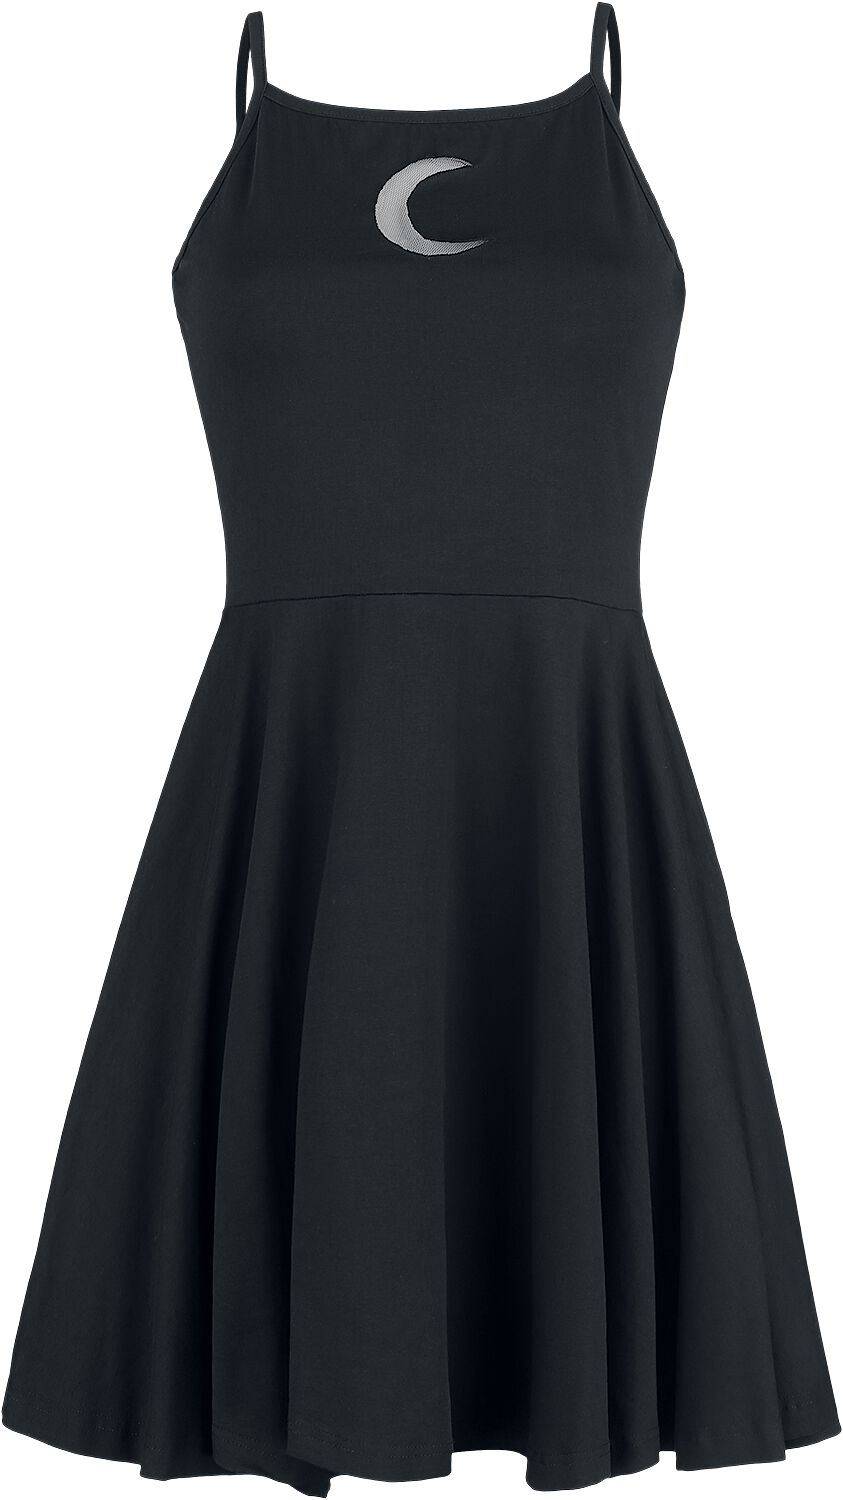 Heartless Zaylee Dress Kurzes Kleid schwarz in XL